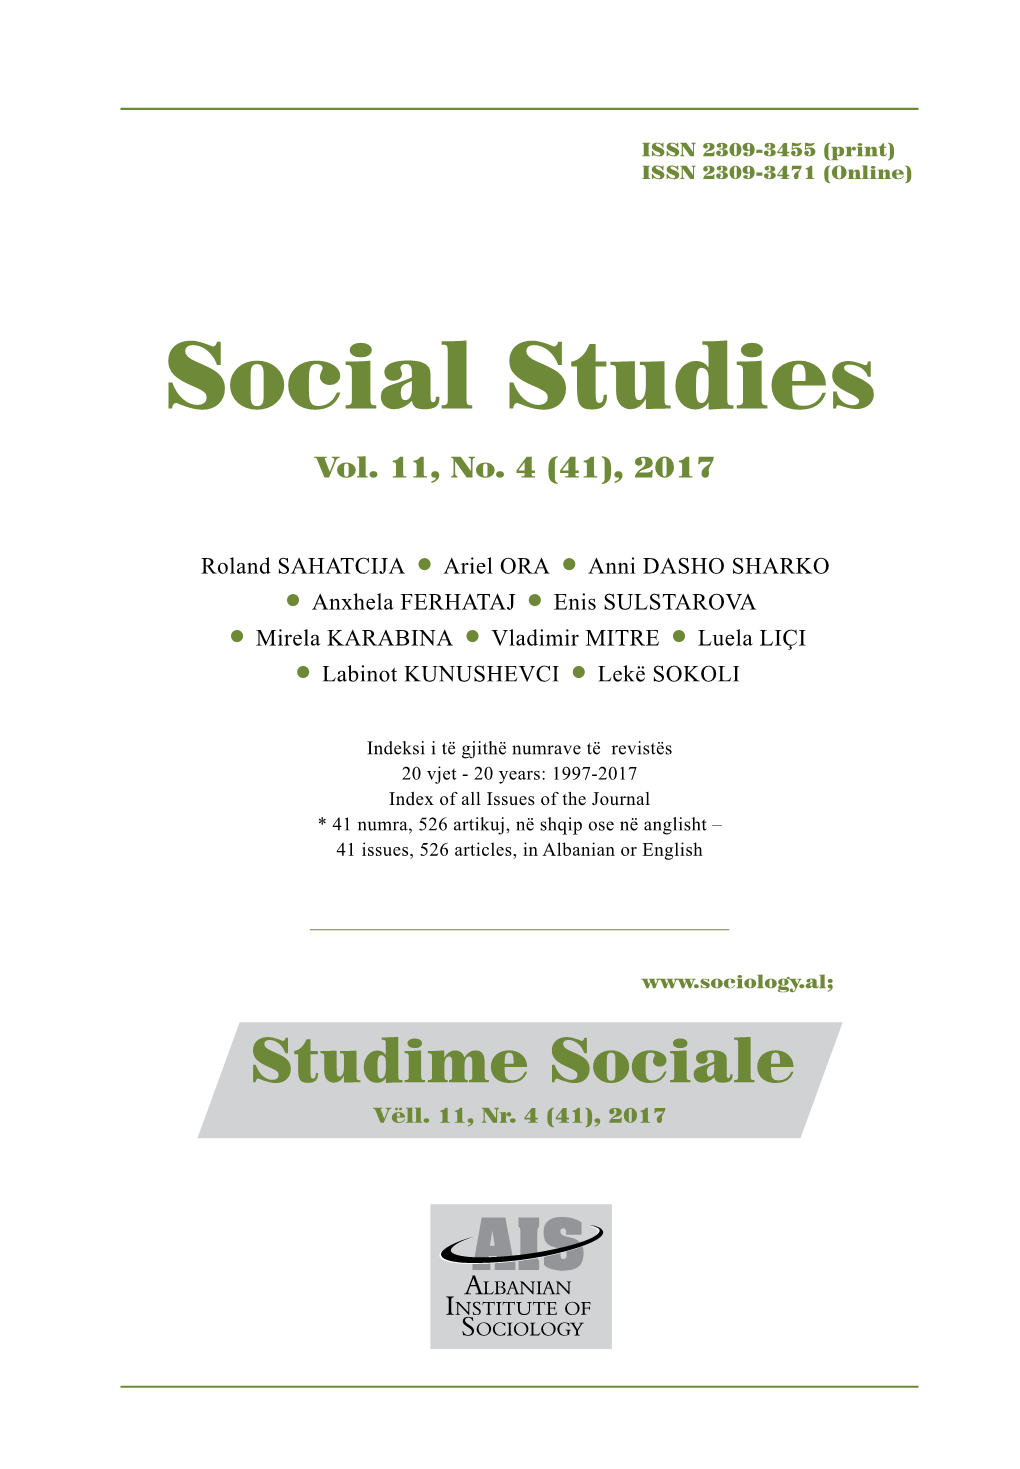 Social Studies Vol